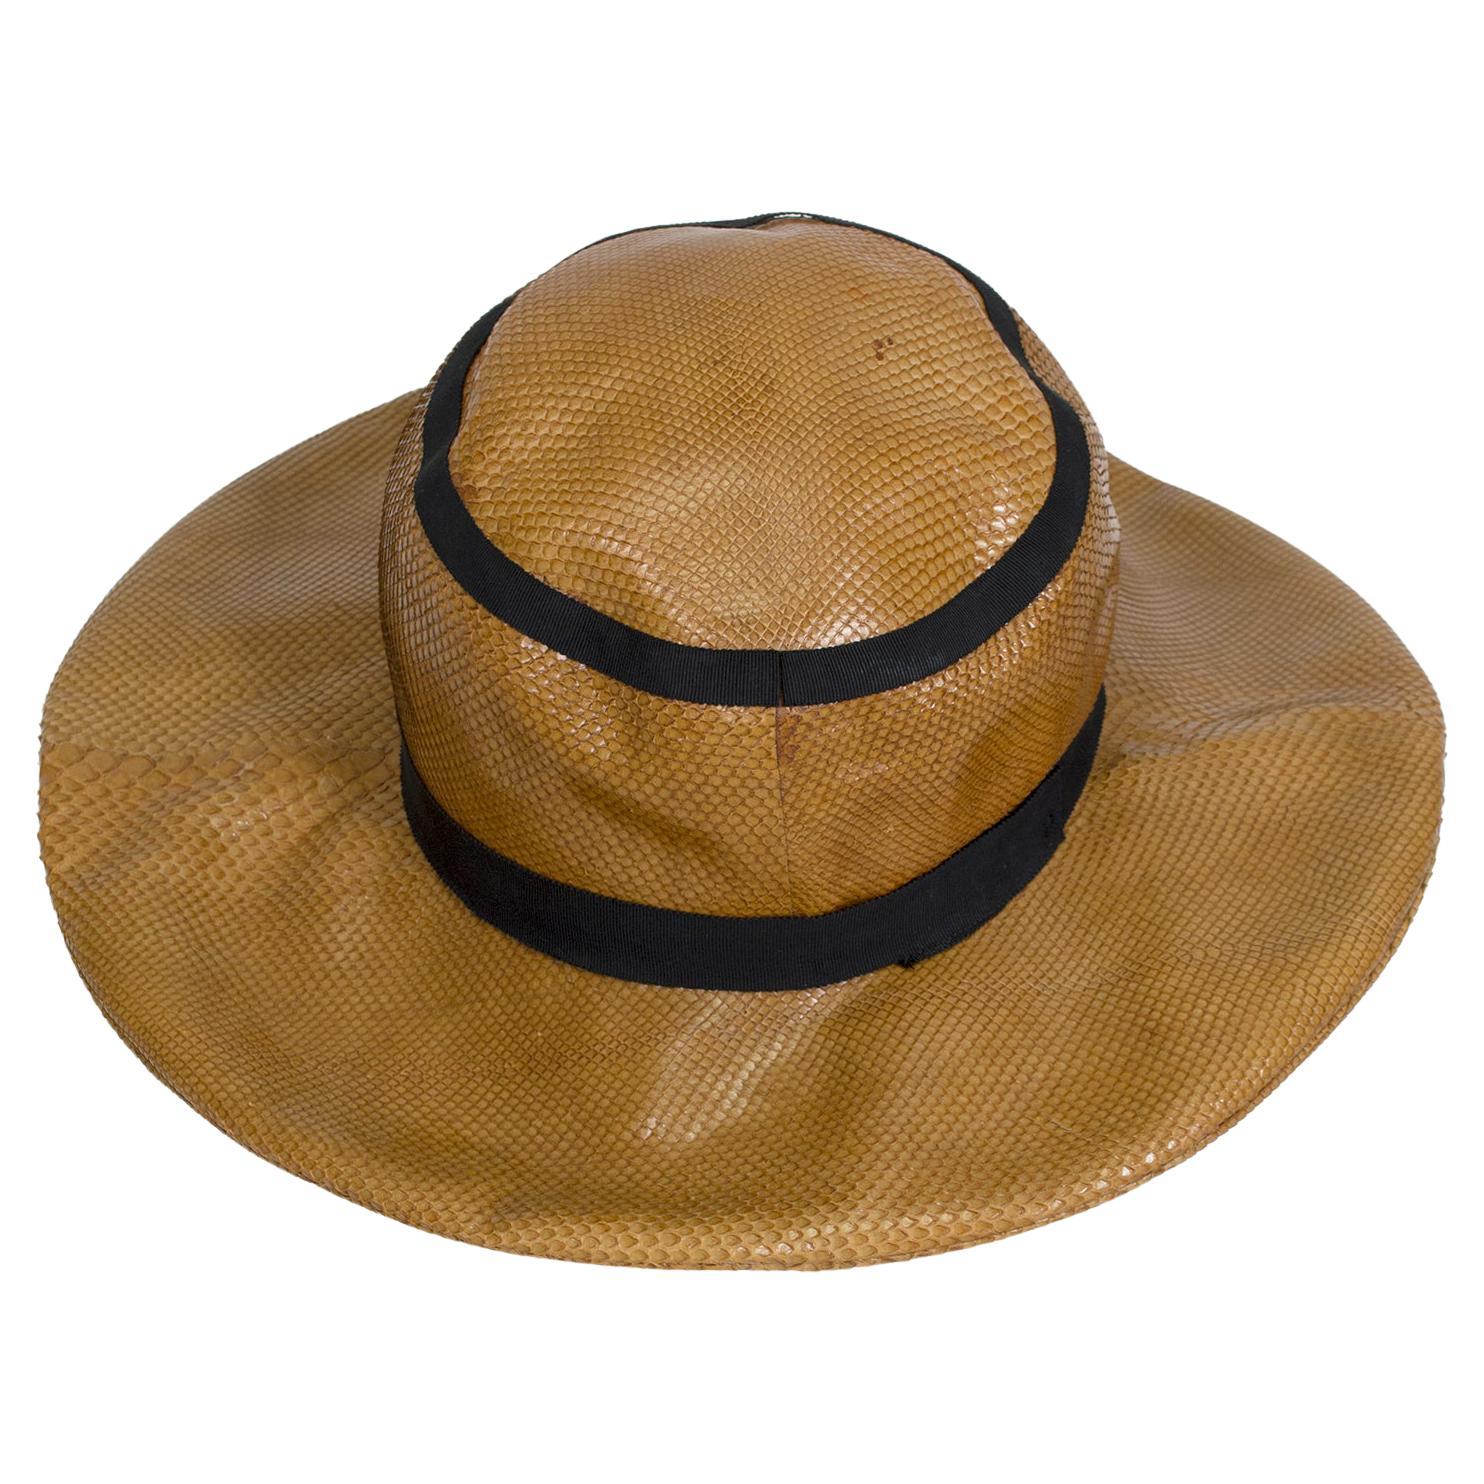 Mr. John Tobacco Snakeskin Wide Brim Cartwheel Hat, French Room – S, 1960s